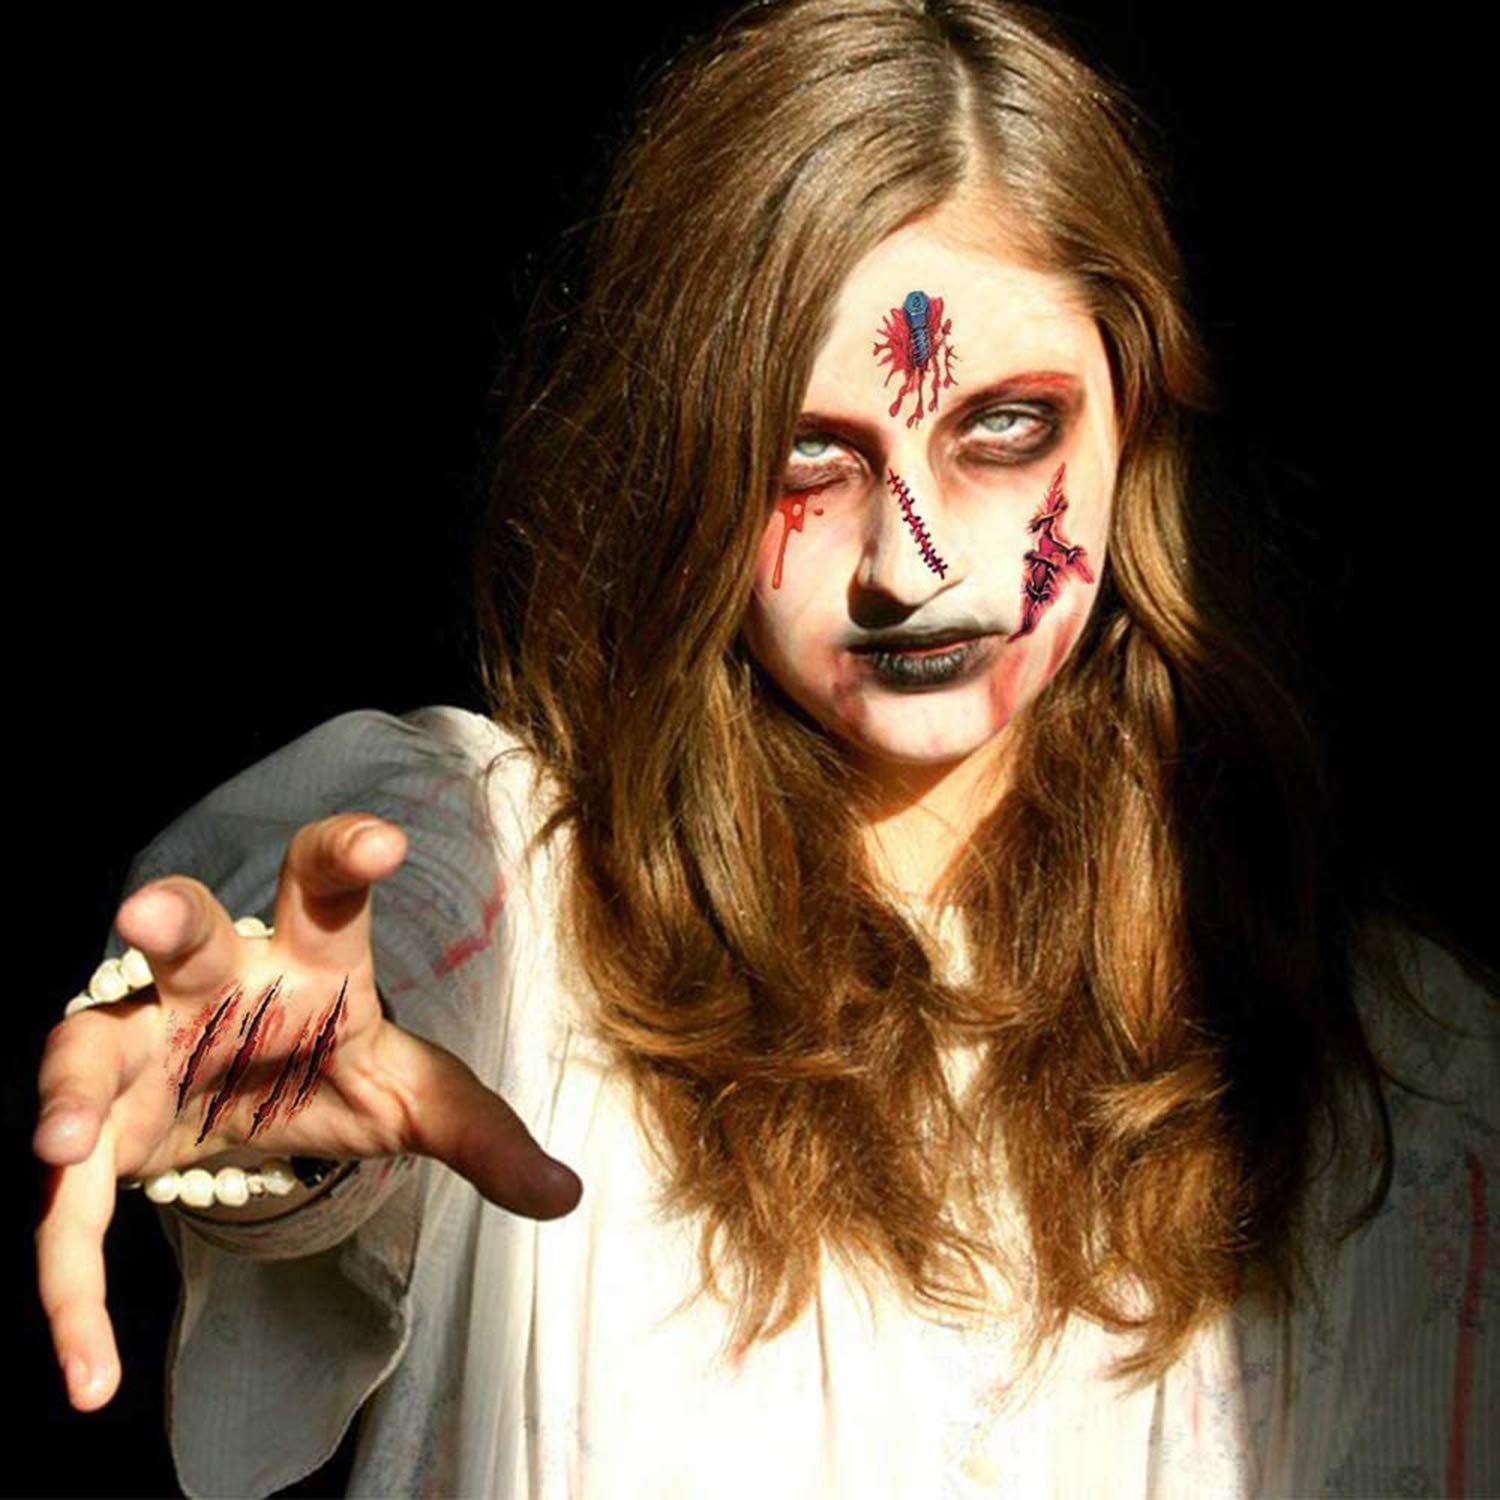 ILEBYGO Halloween Zombie Scars Tattoos,Zombie Makeup, Halloween Temporary Tattoos Fake Scars Makeup Vampire Makeup for Cos Play